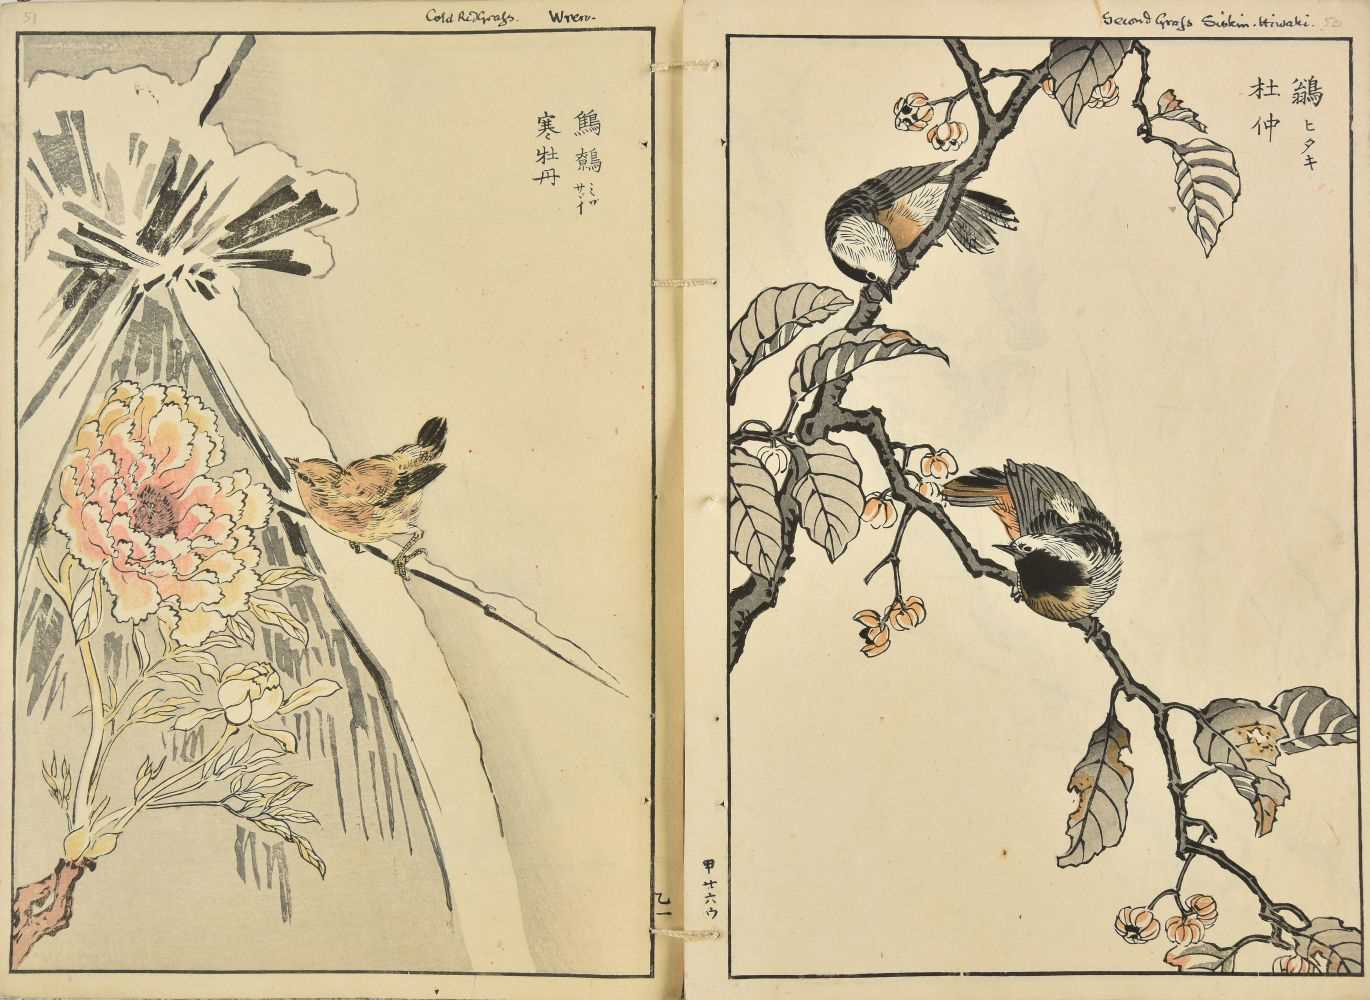 Lot 68 - Bunrei (Maekawa, 1837-1917). Studies of Birds and Plants by Bunrei